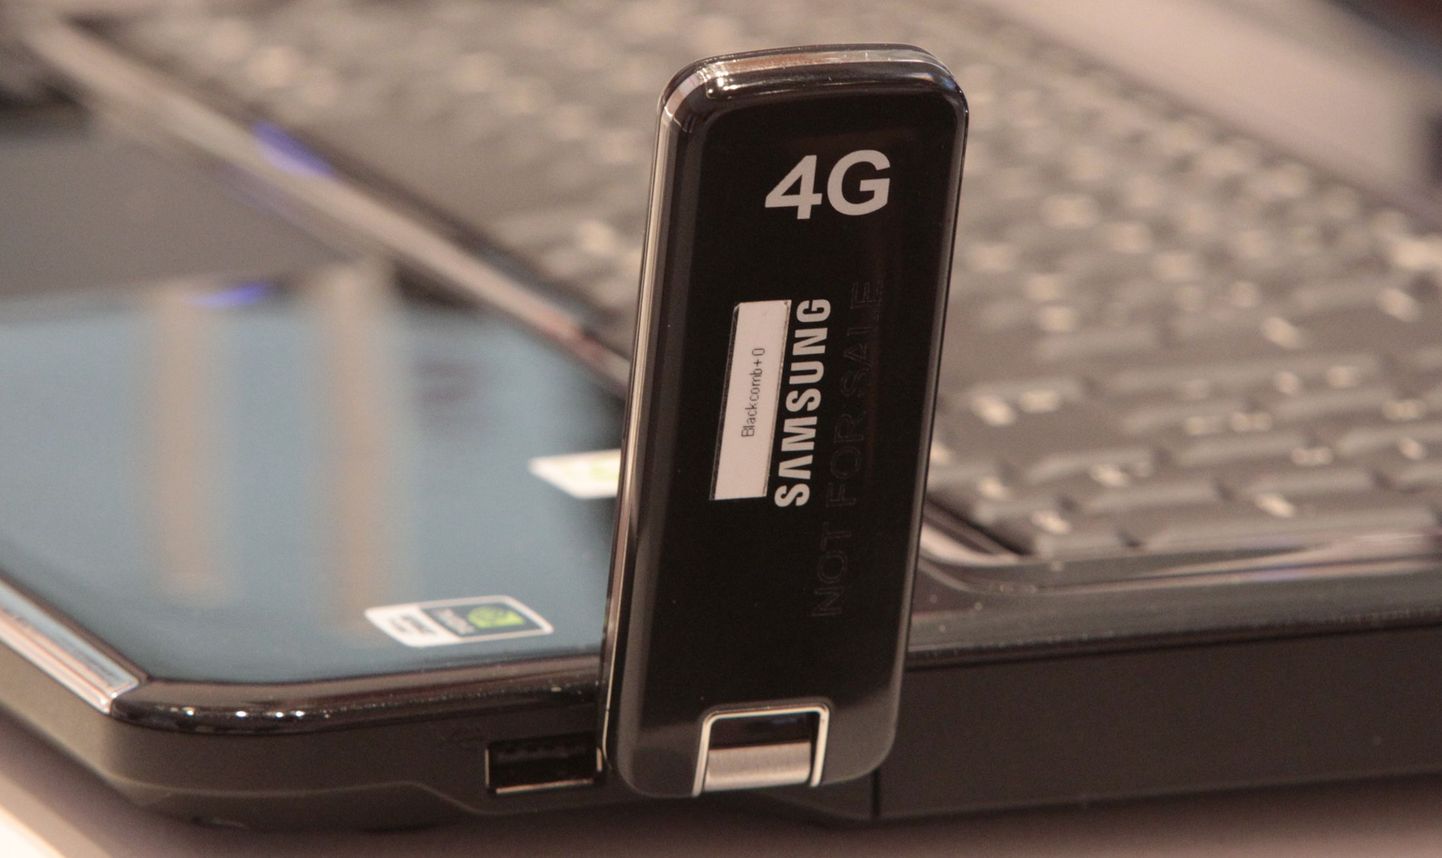 Samsungi 4G modem